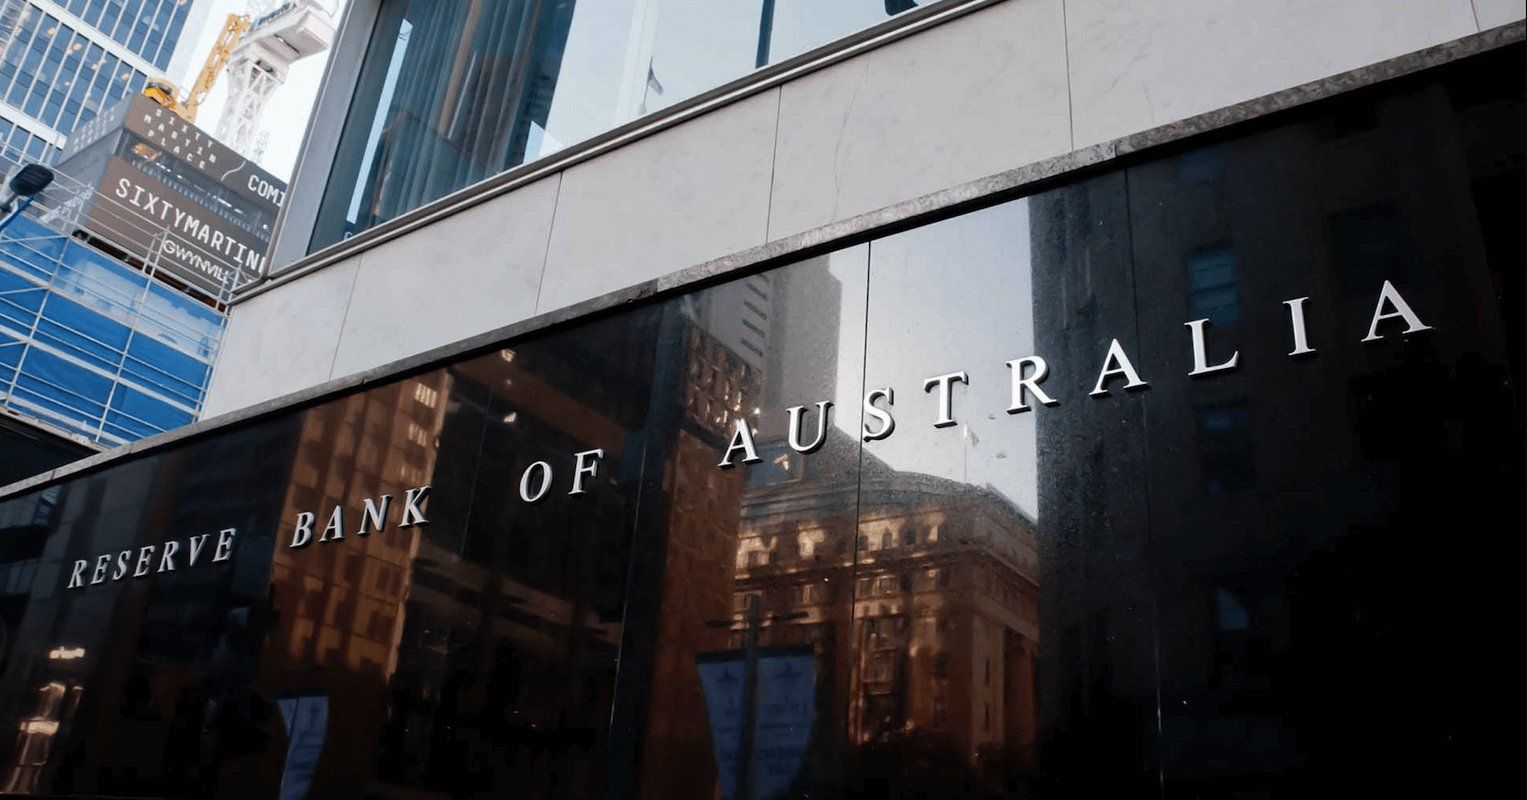 Reserve Bank of Australia seeks views on Global Stablecoins